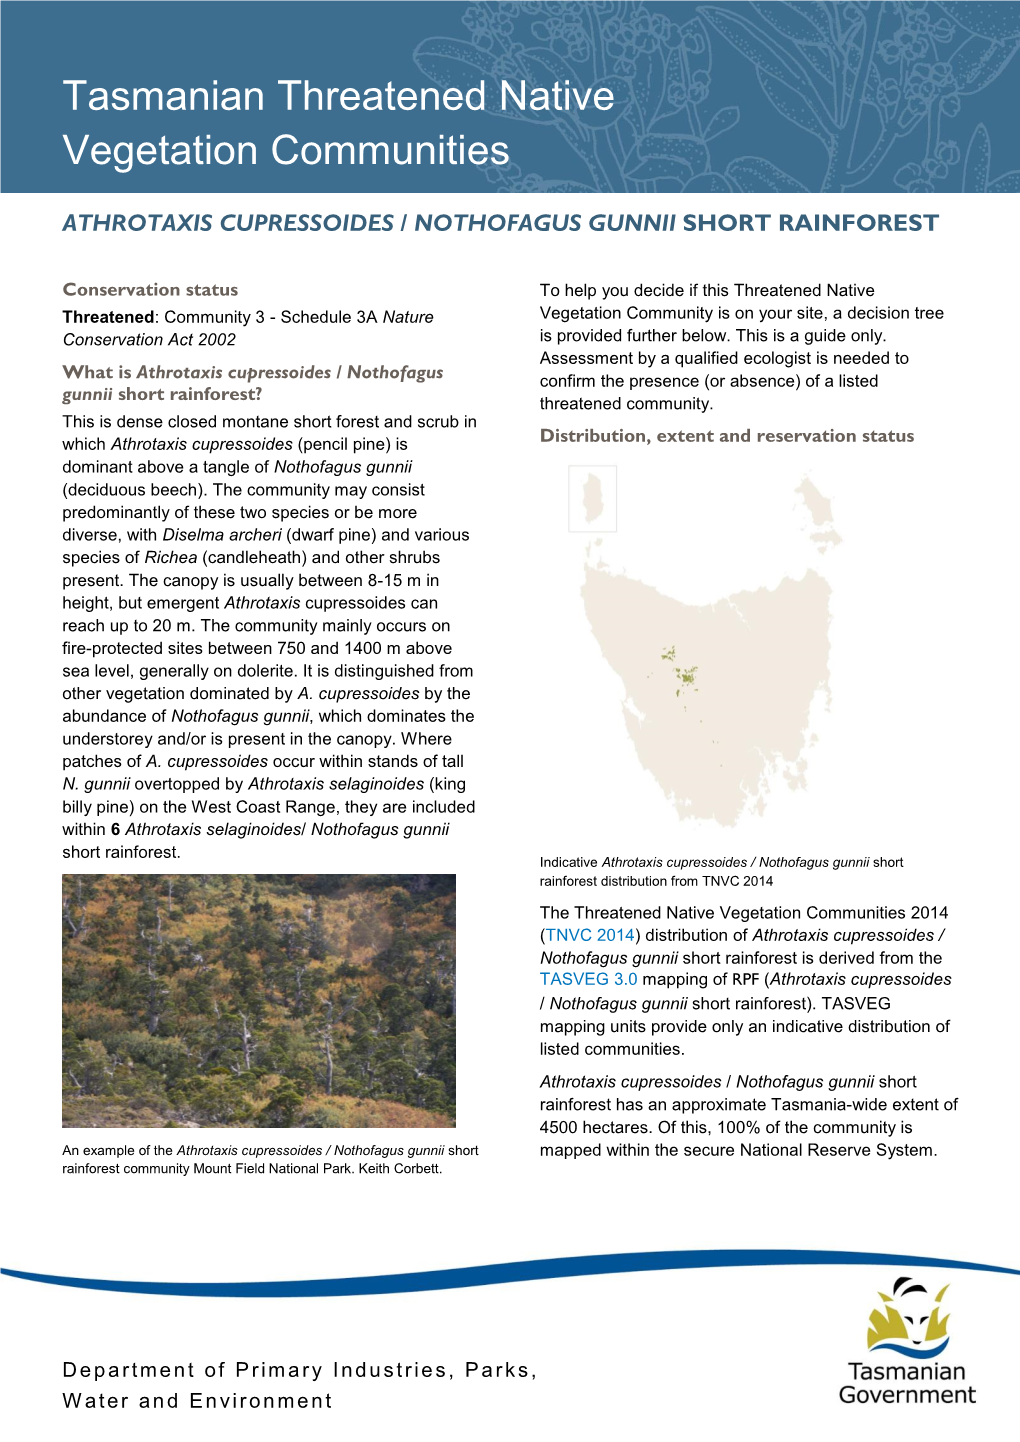 Tasmanian Threatened Native Vegetation Communities